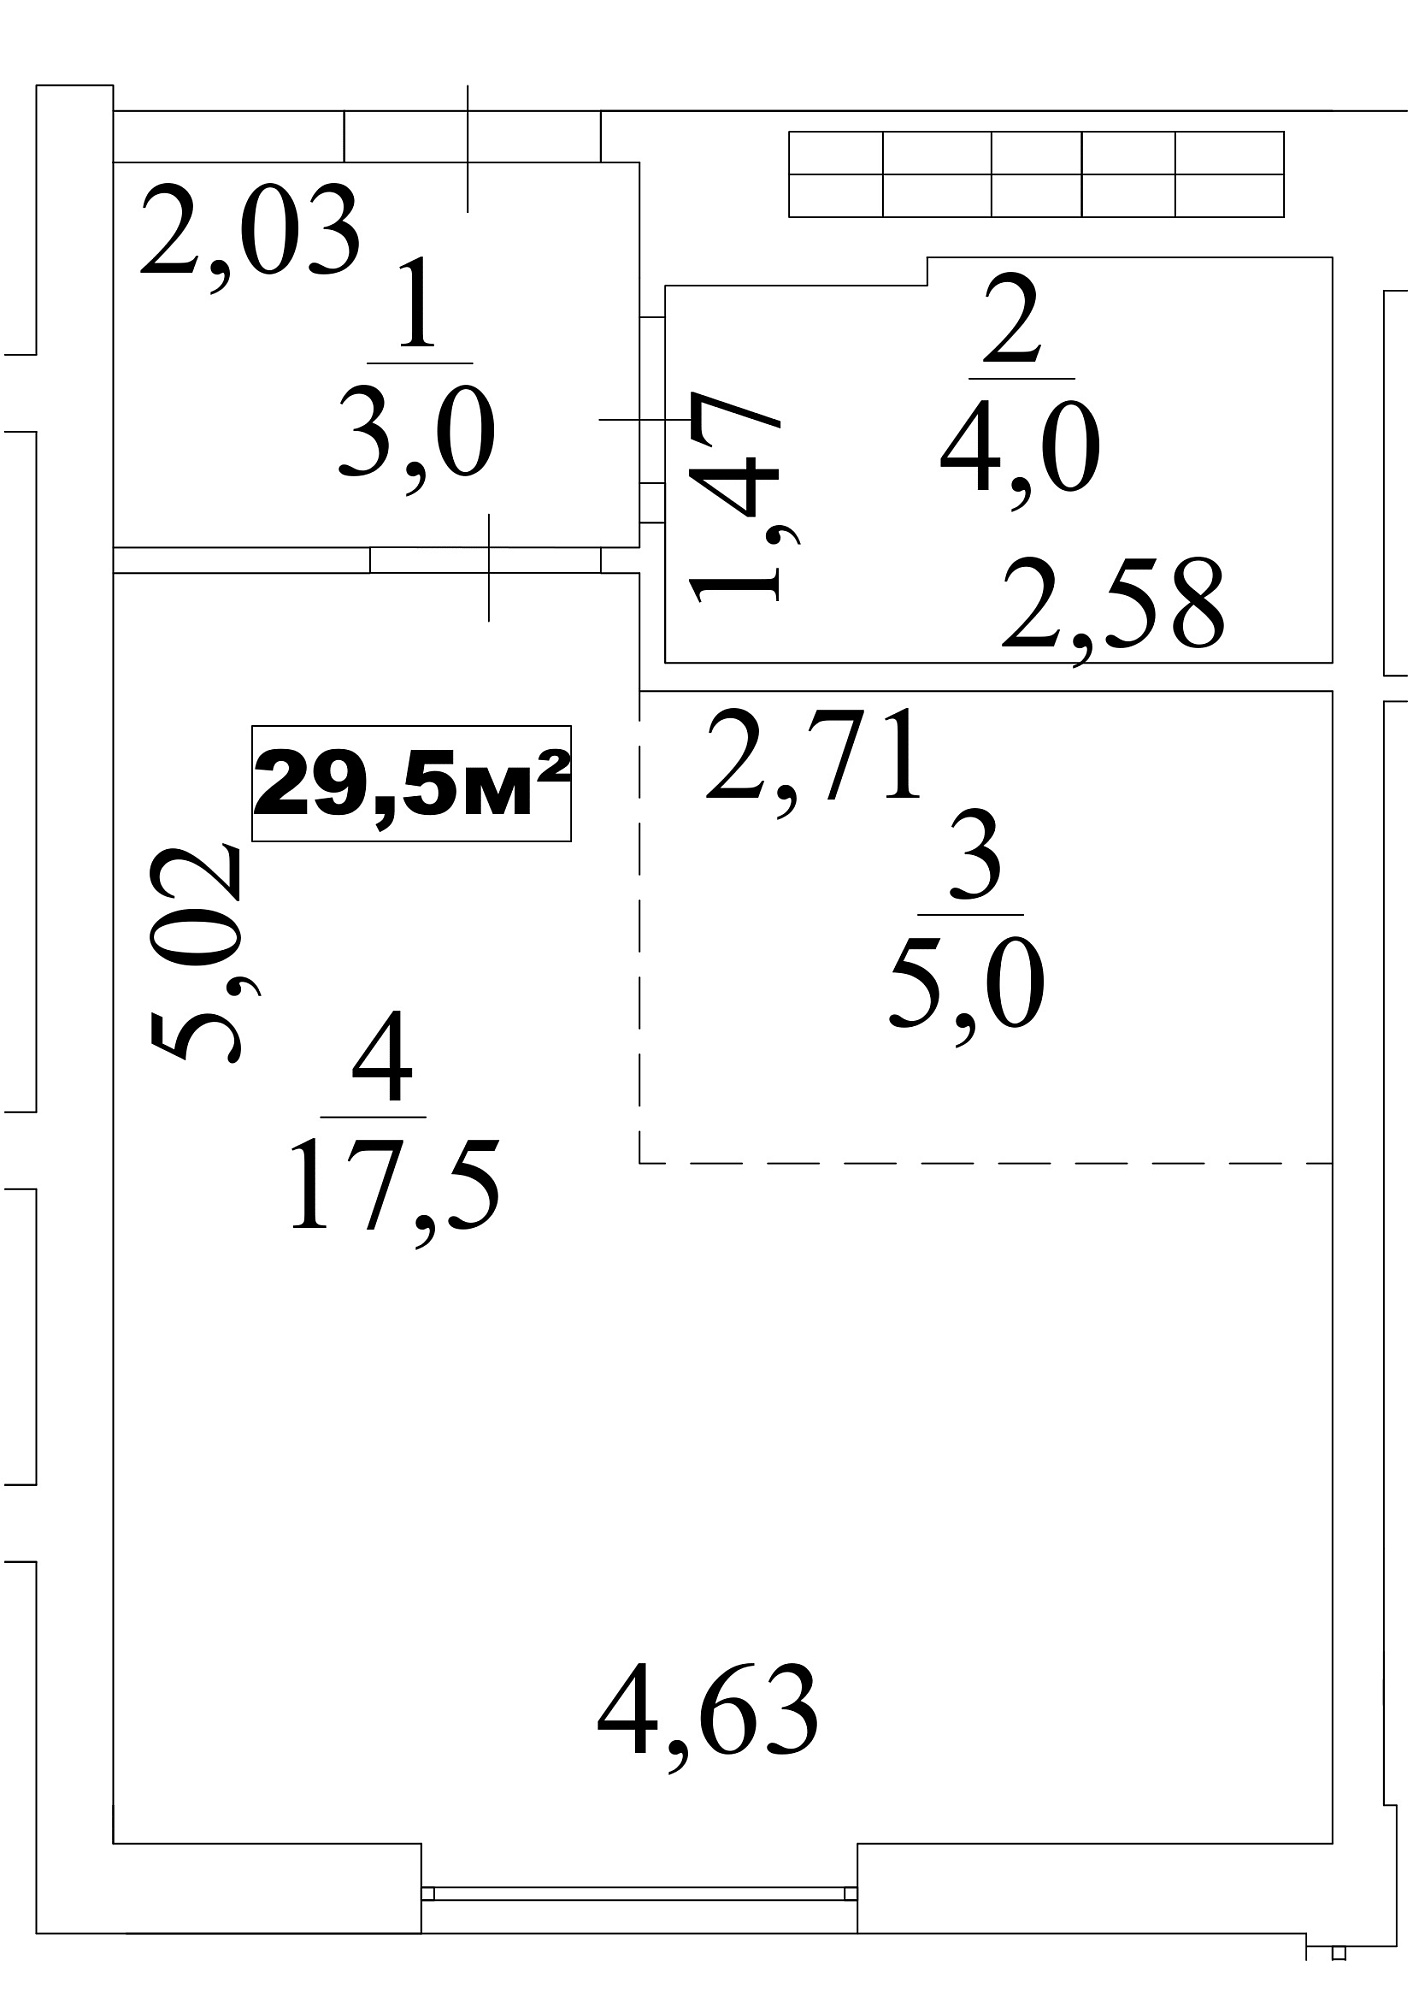 Planning Smart flats area 29.5m2, AB-10-04/00036.